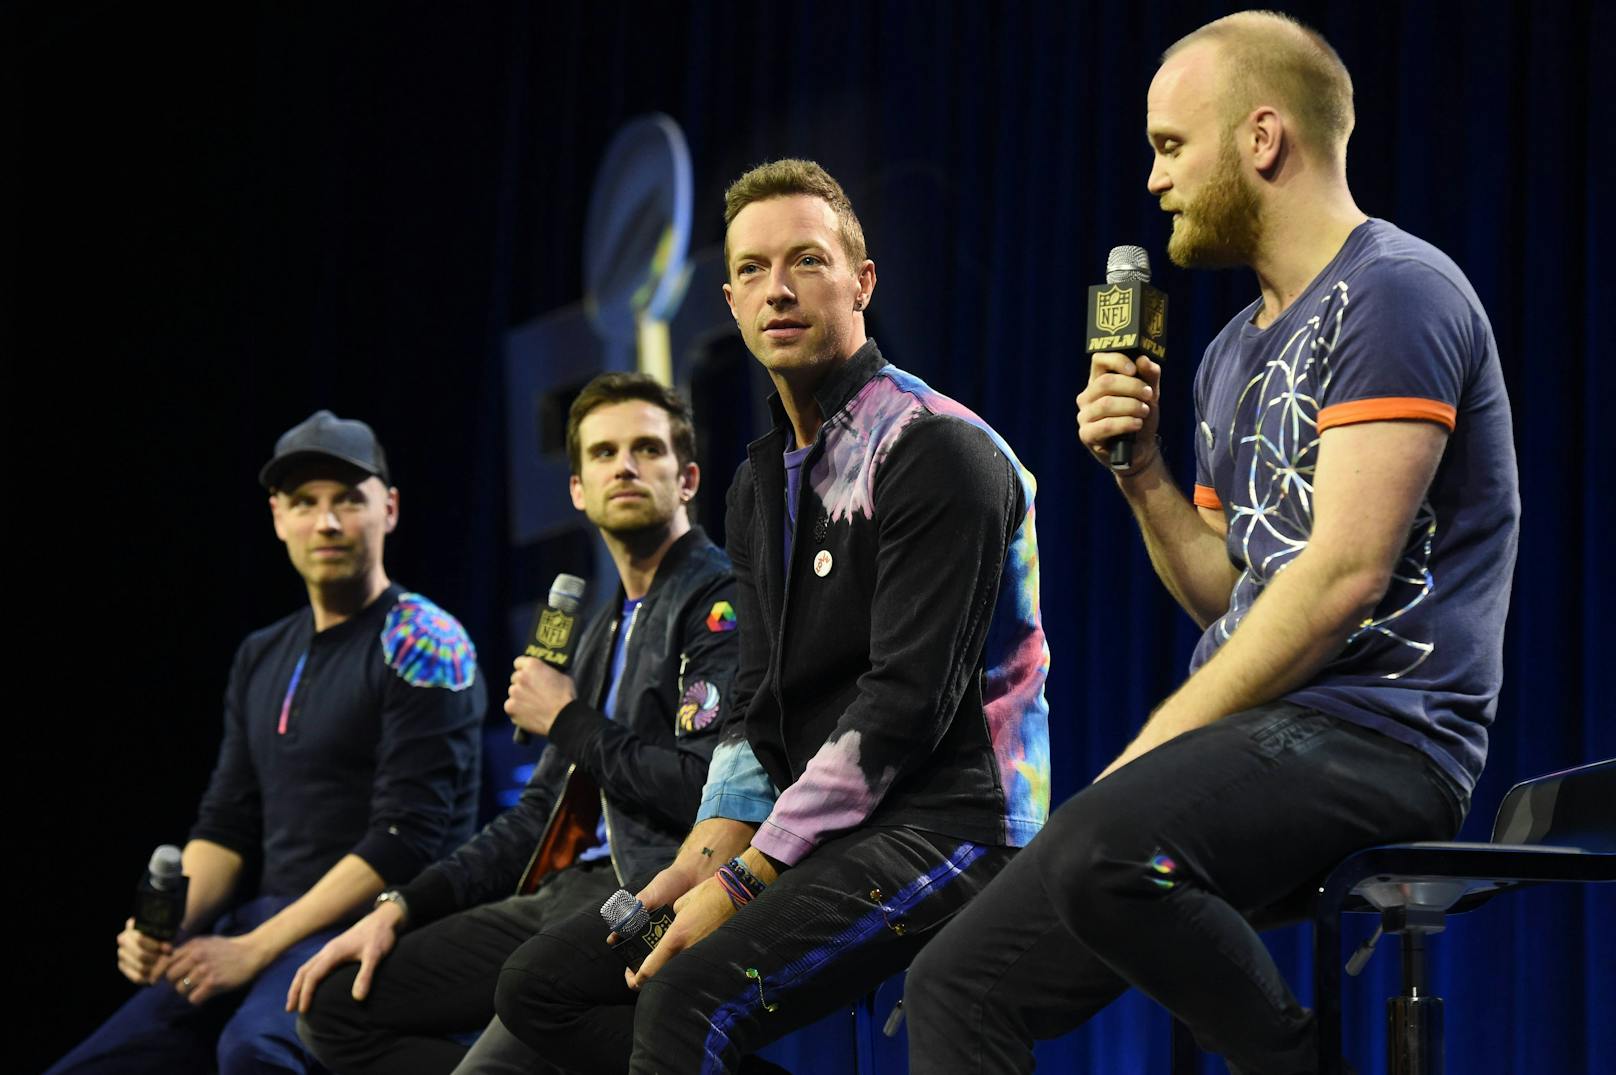 Band Coldplay beendet ihre Musikkarriere